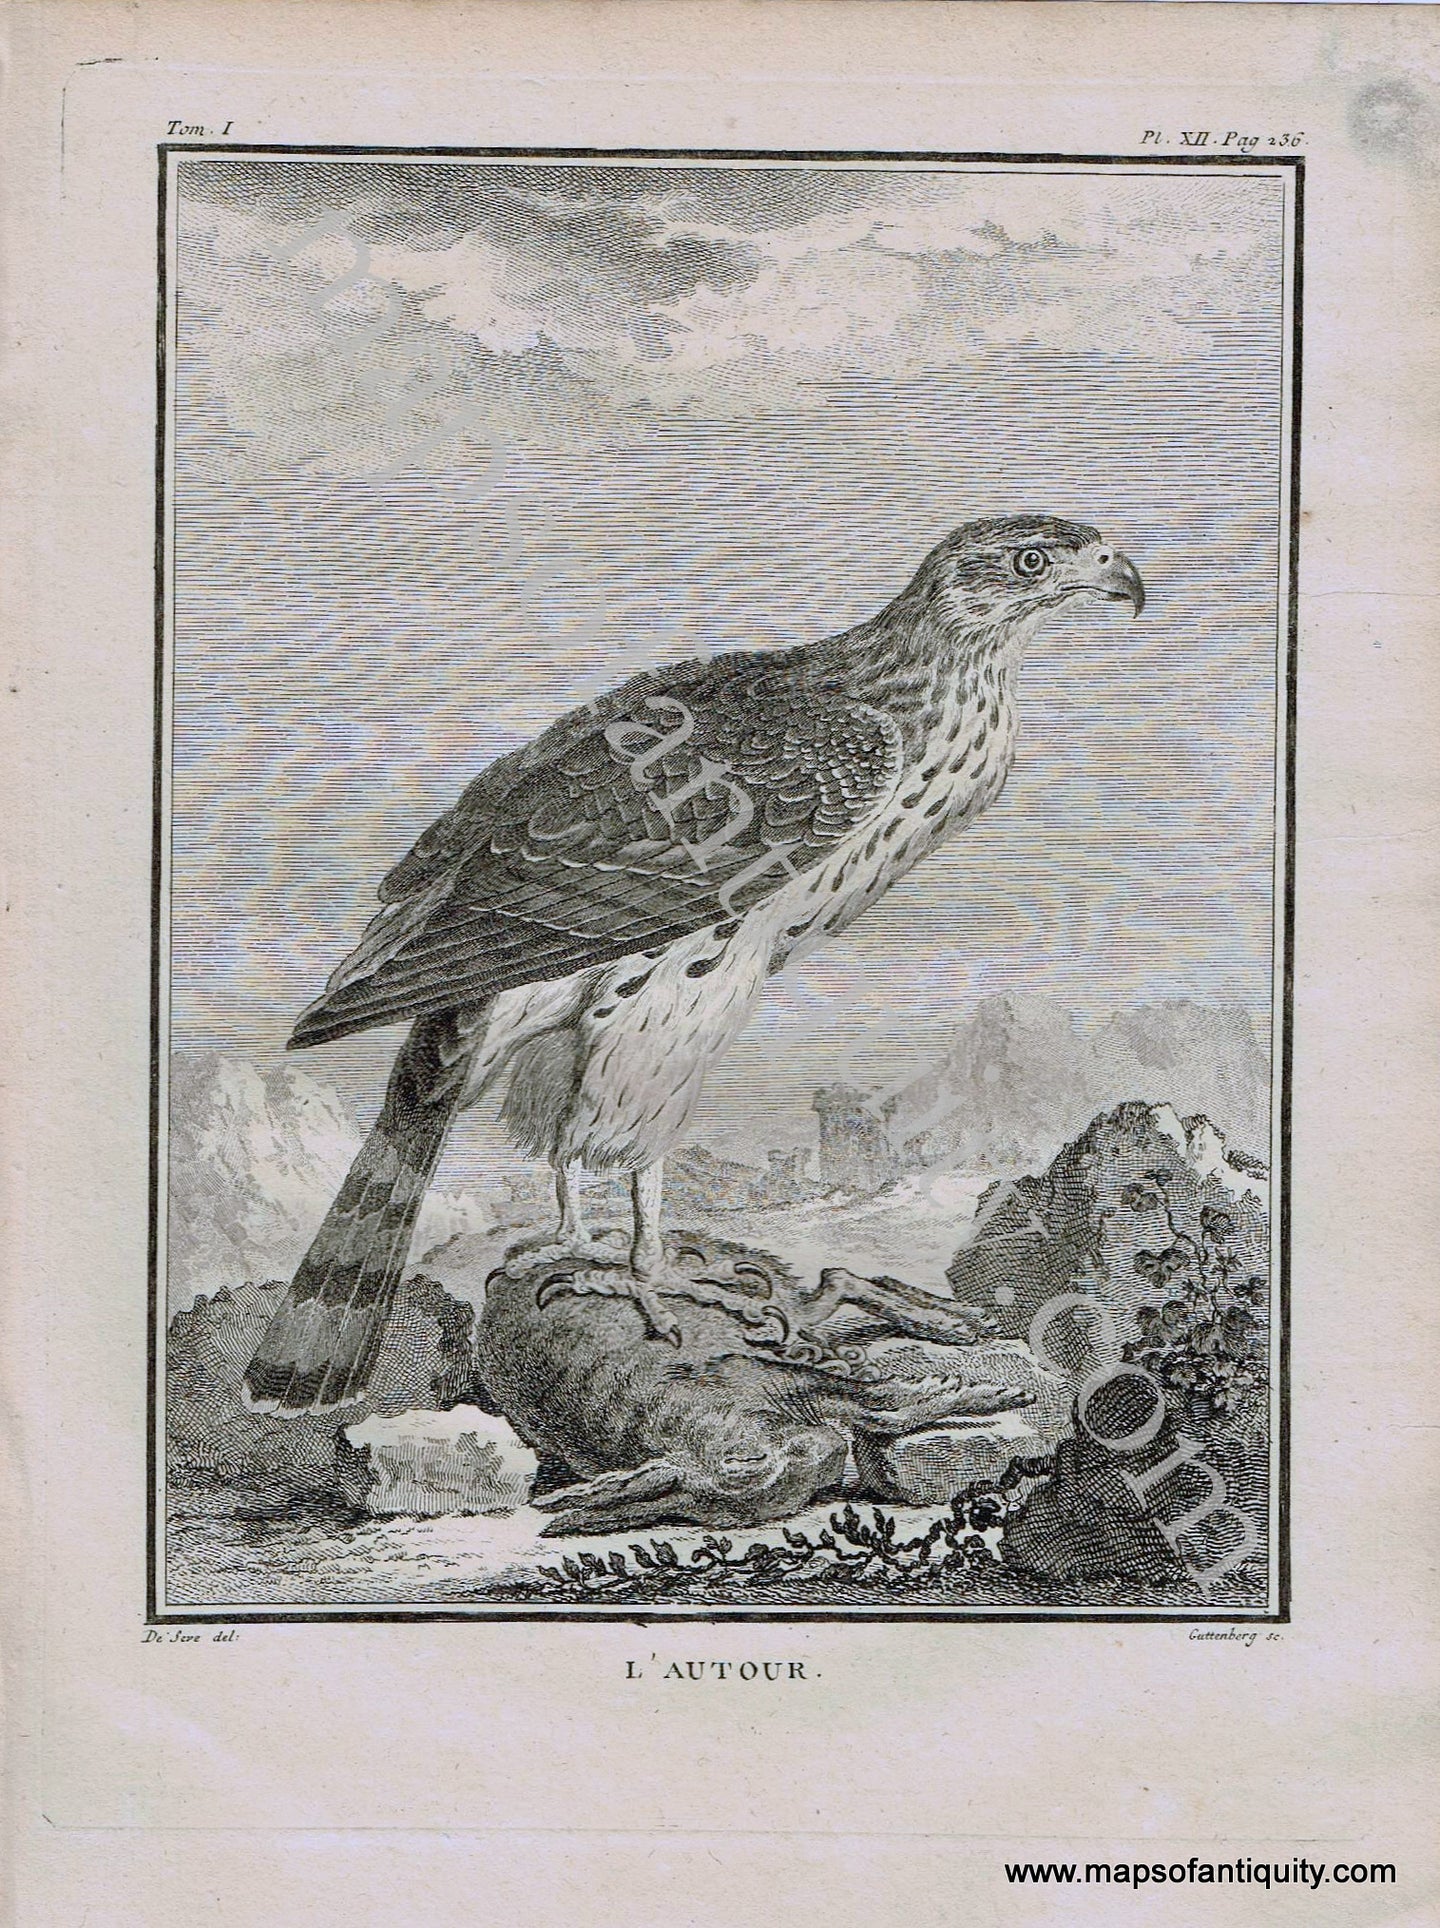 Antique-Black-and-White-Engraved-Illustration-L'Autor-Bird-c.-1770-Buffon-Birds-1800s-19th-century-Maps-of-Antiquity